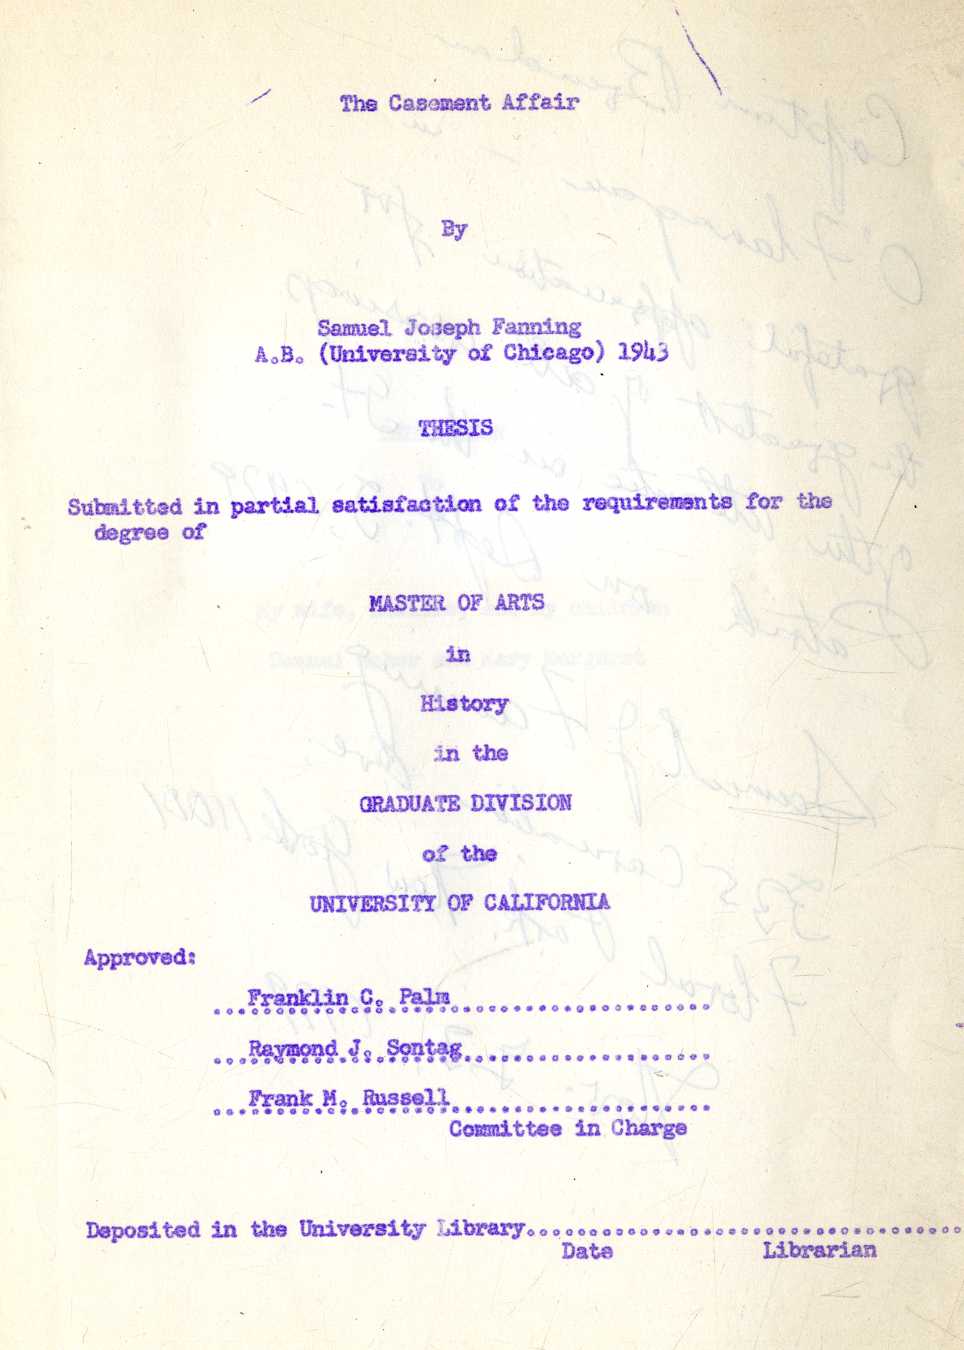 [Roger Casement] Fanning (Sam. Jos) The Casement Affair, 4to typescript, 1943. 93pp. prepared for